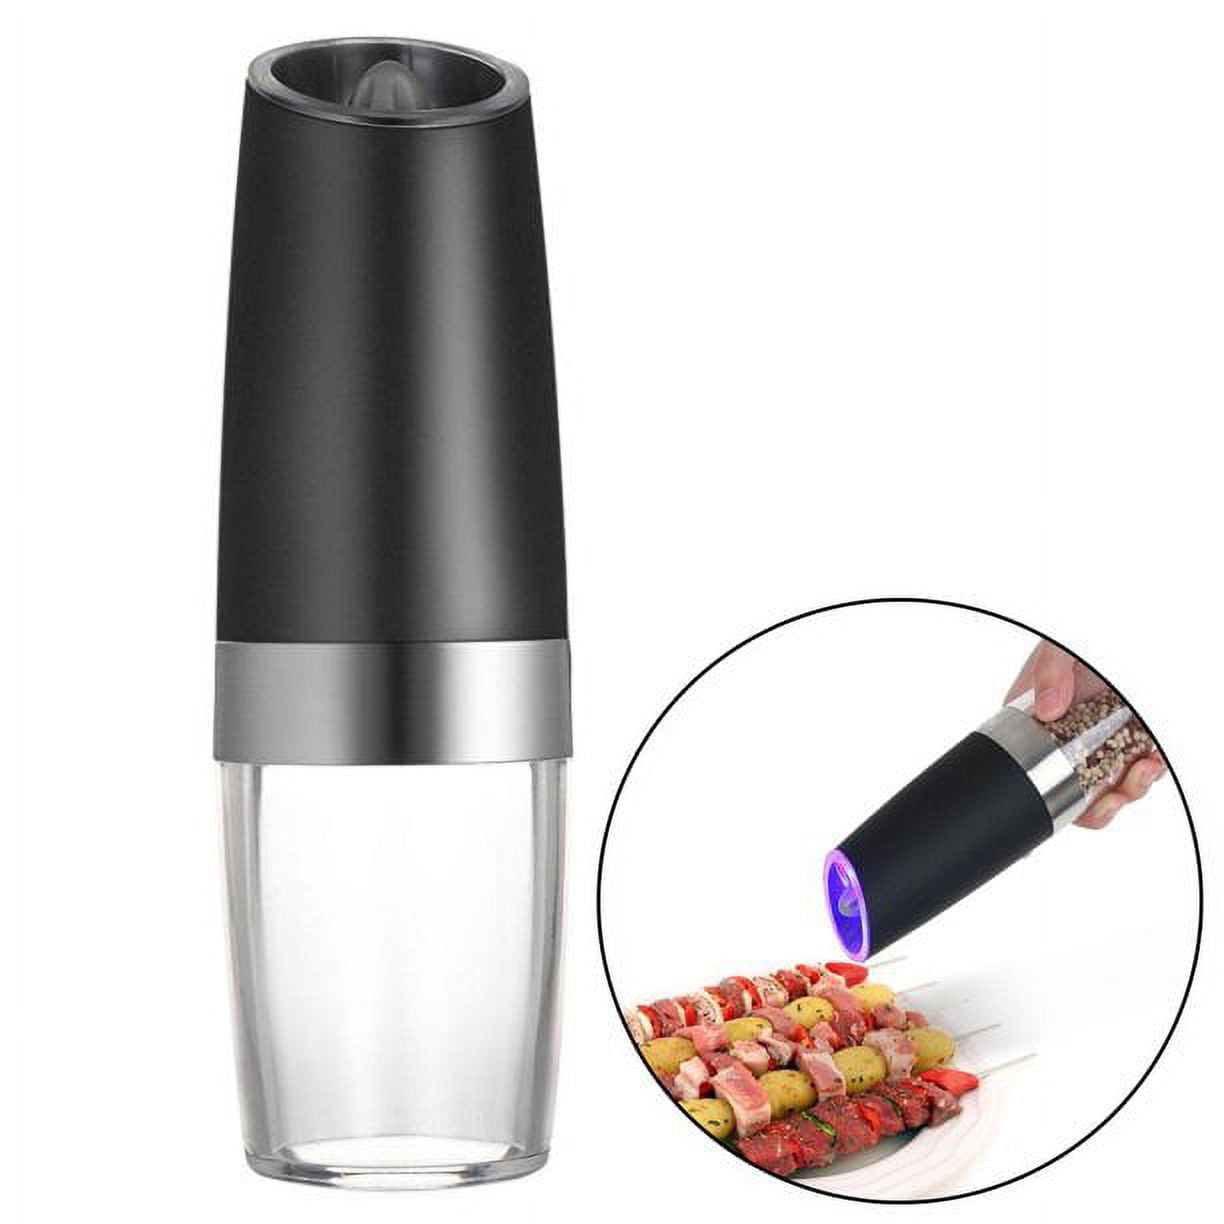 Homchum Gravity Electric Salt Grinder, Pepper Grinder, Automatic